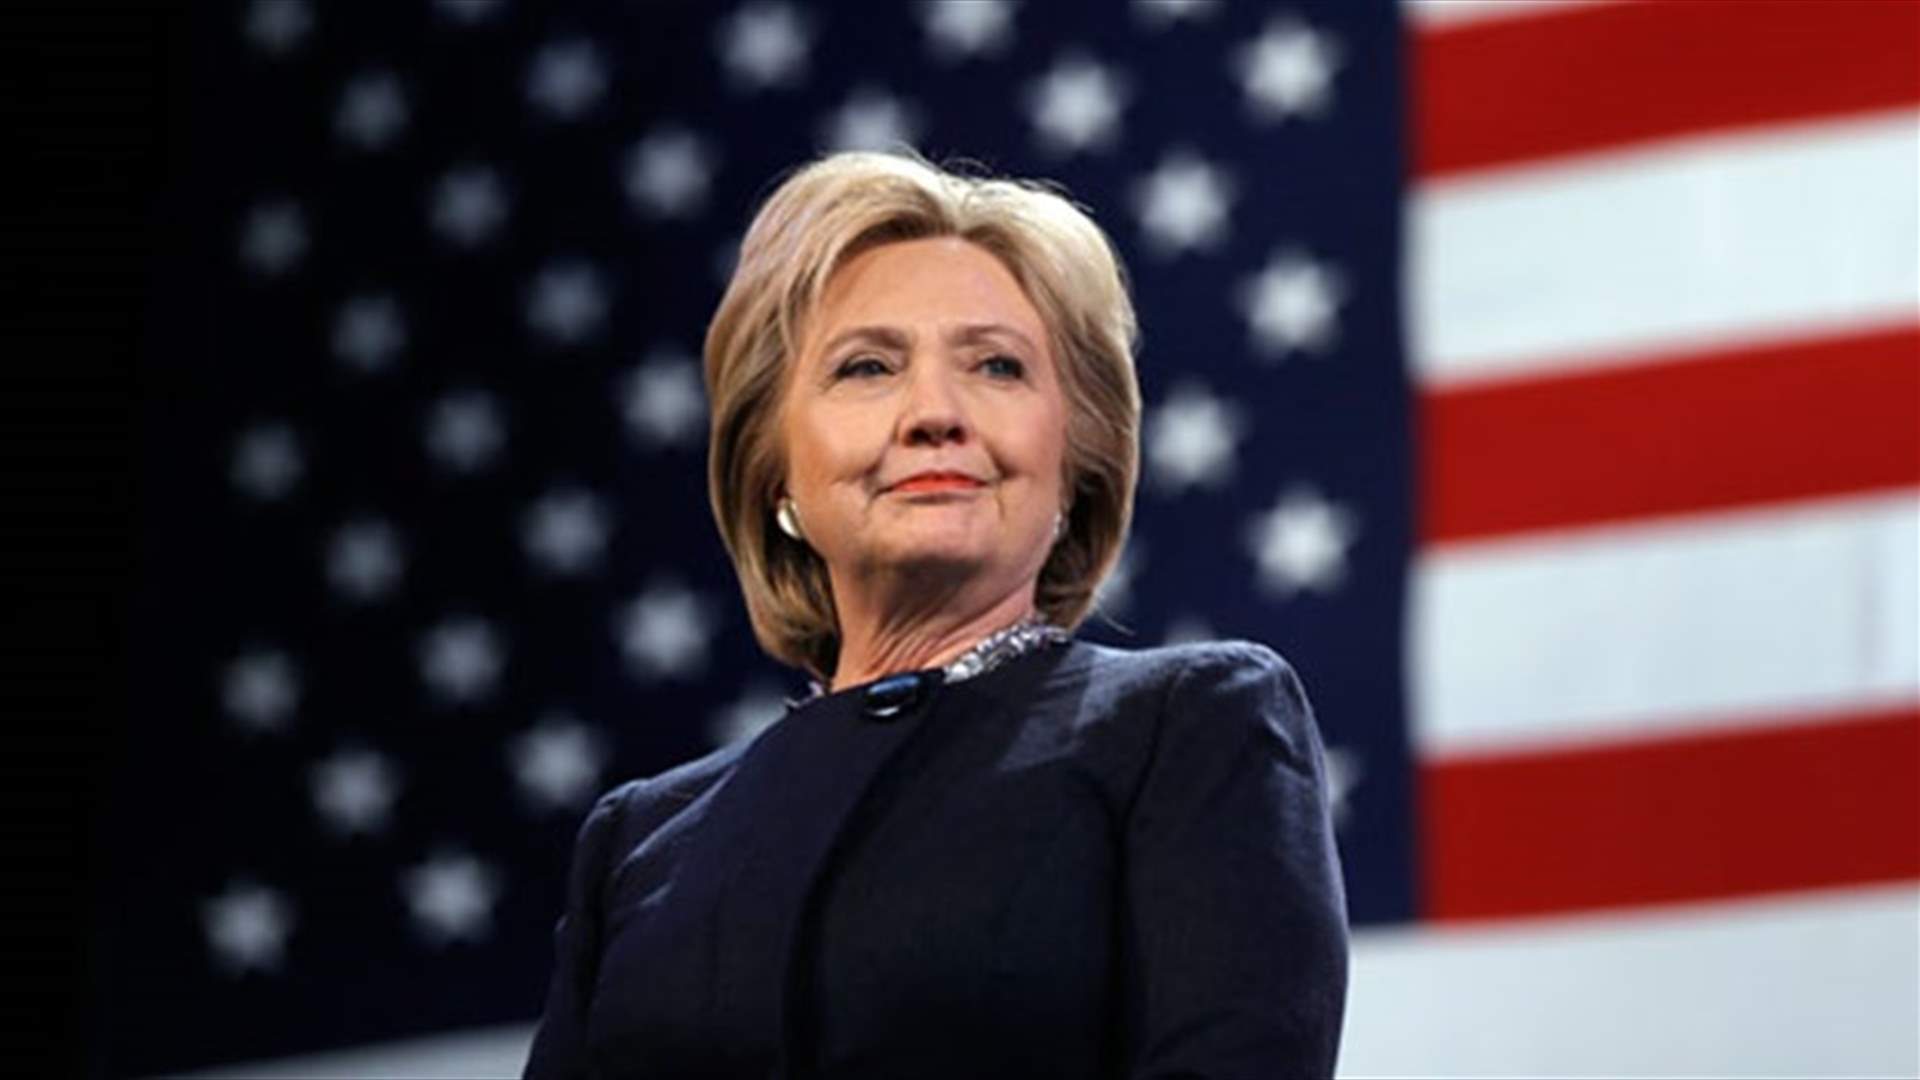 Syrian political opposition says hopes Clinton wins U.S. presidency